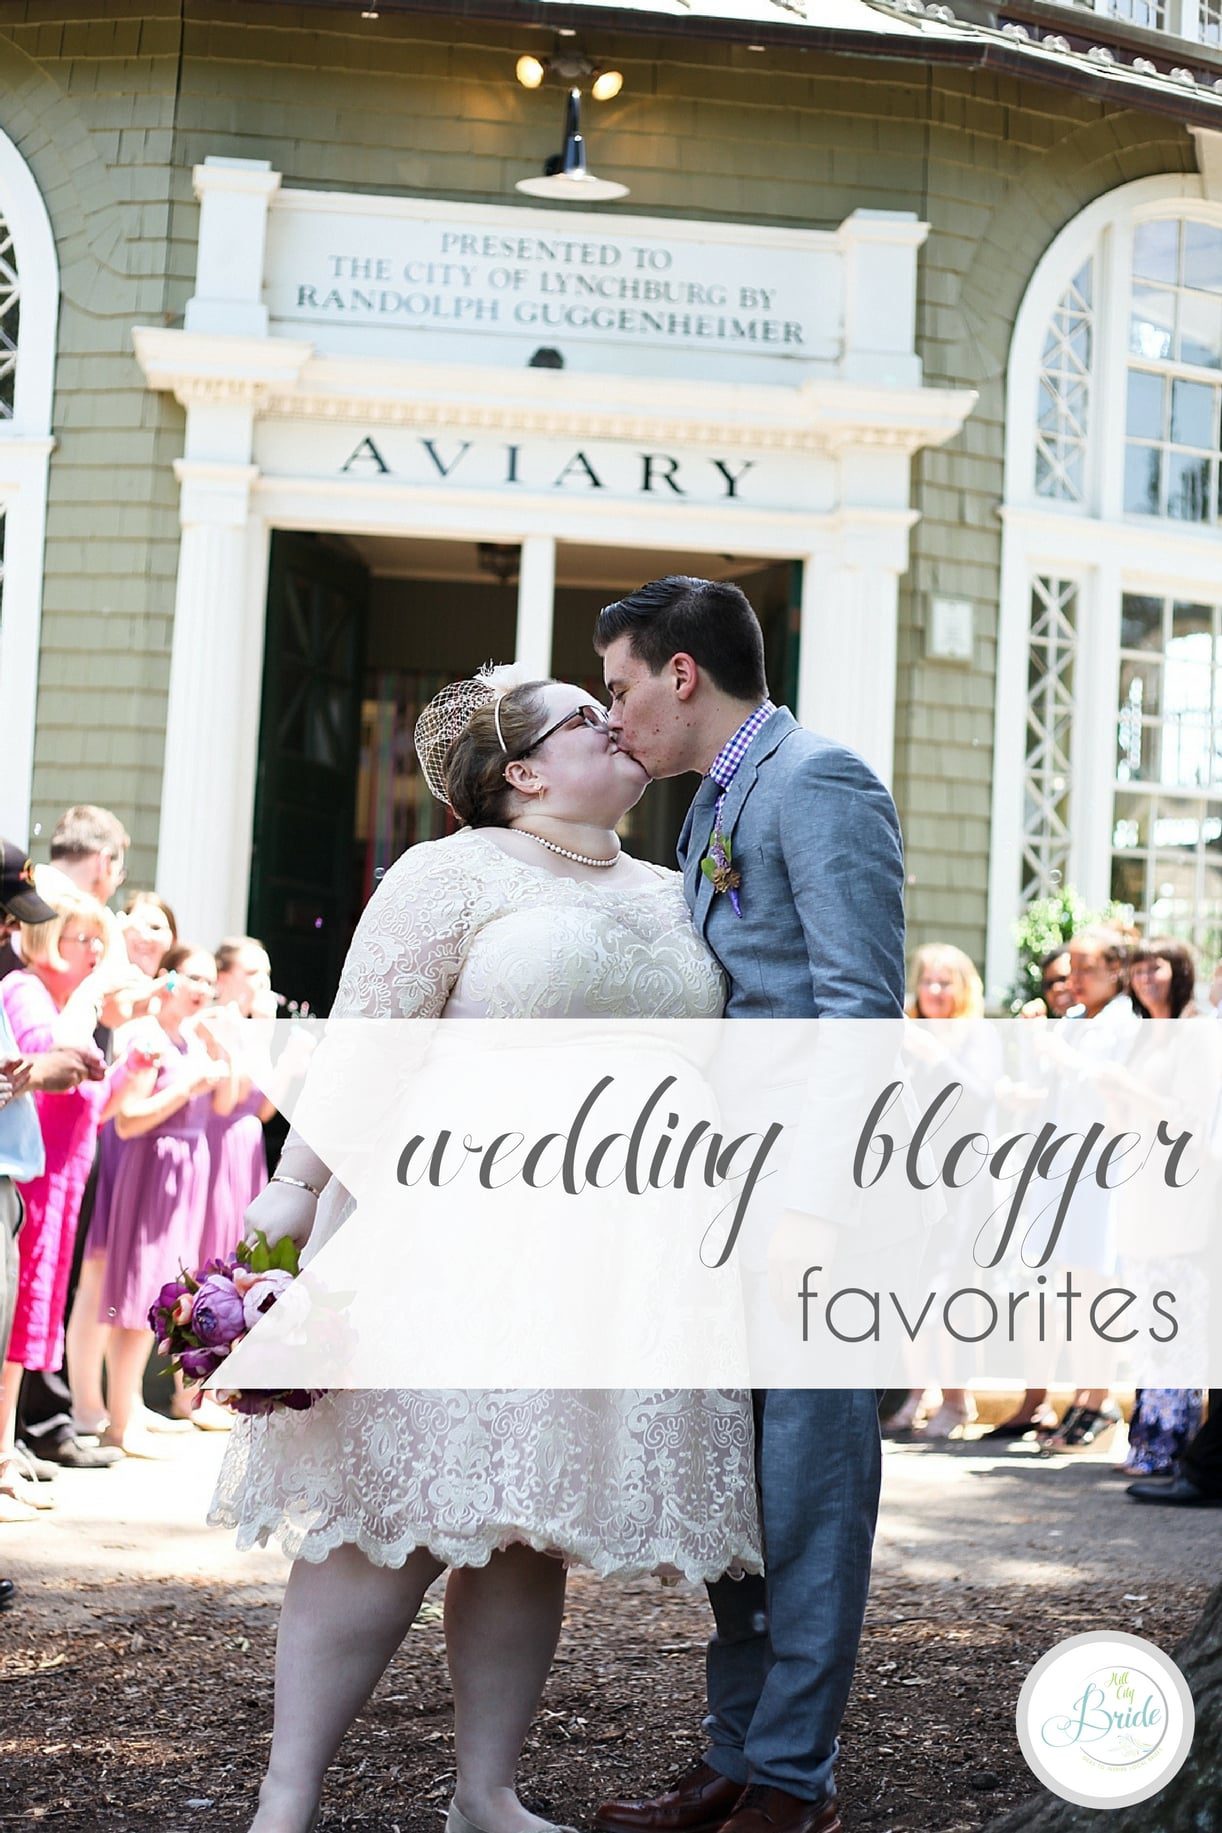 Favorites from Wedding Bloggers | Hill City Bride Virginia Wedding Blog